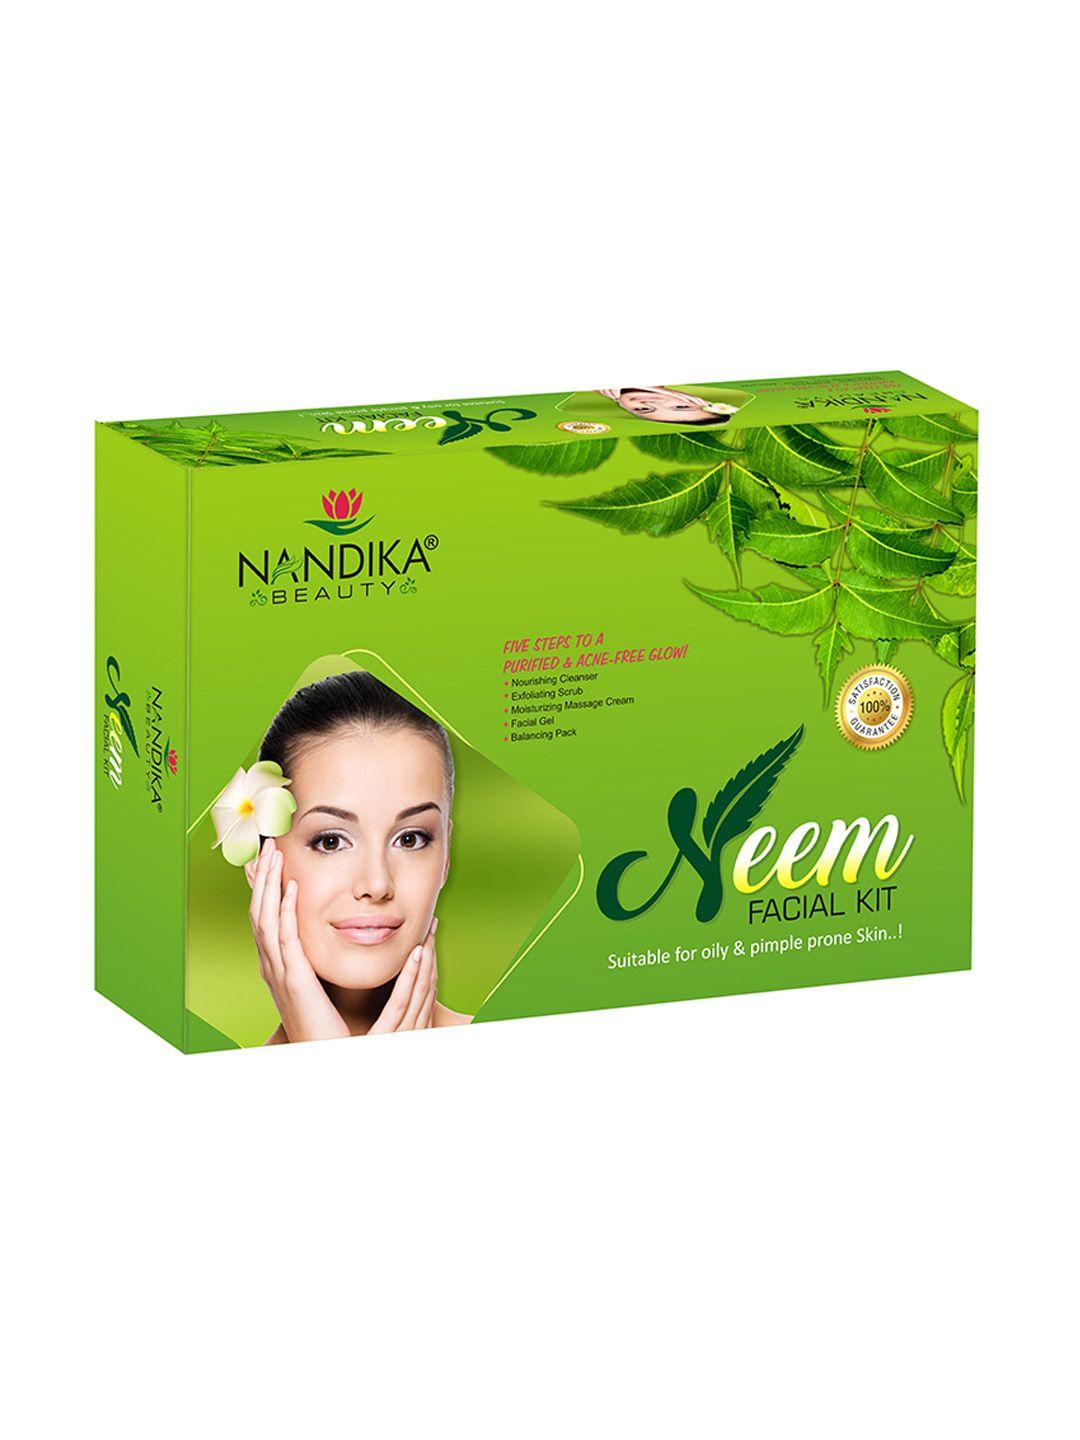 nandika-beauty-unisex-neem-facial-kit-for-oily-&-acne-prone-skin---310g